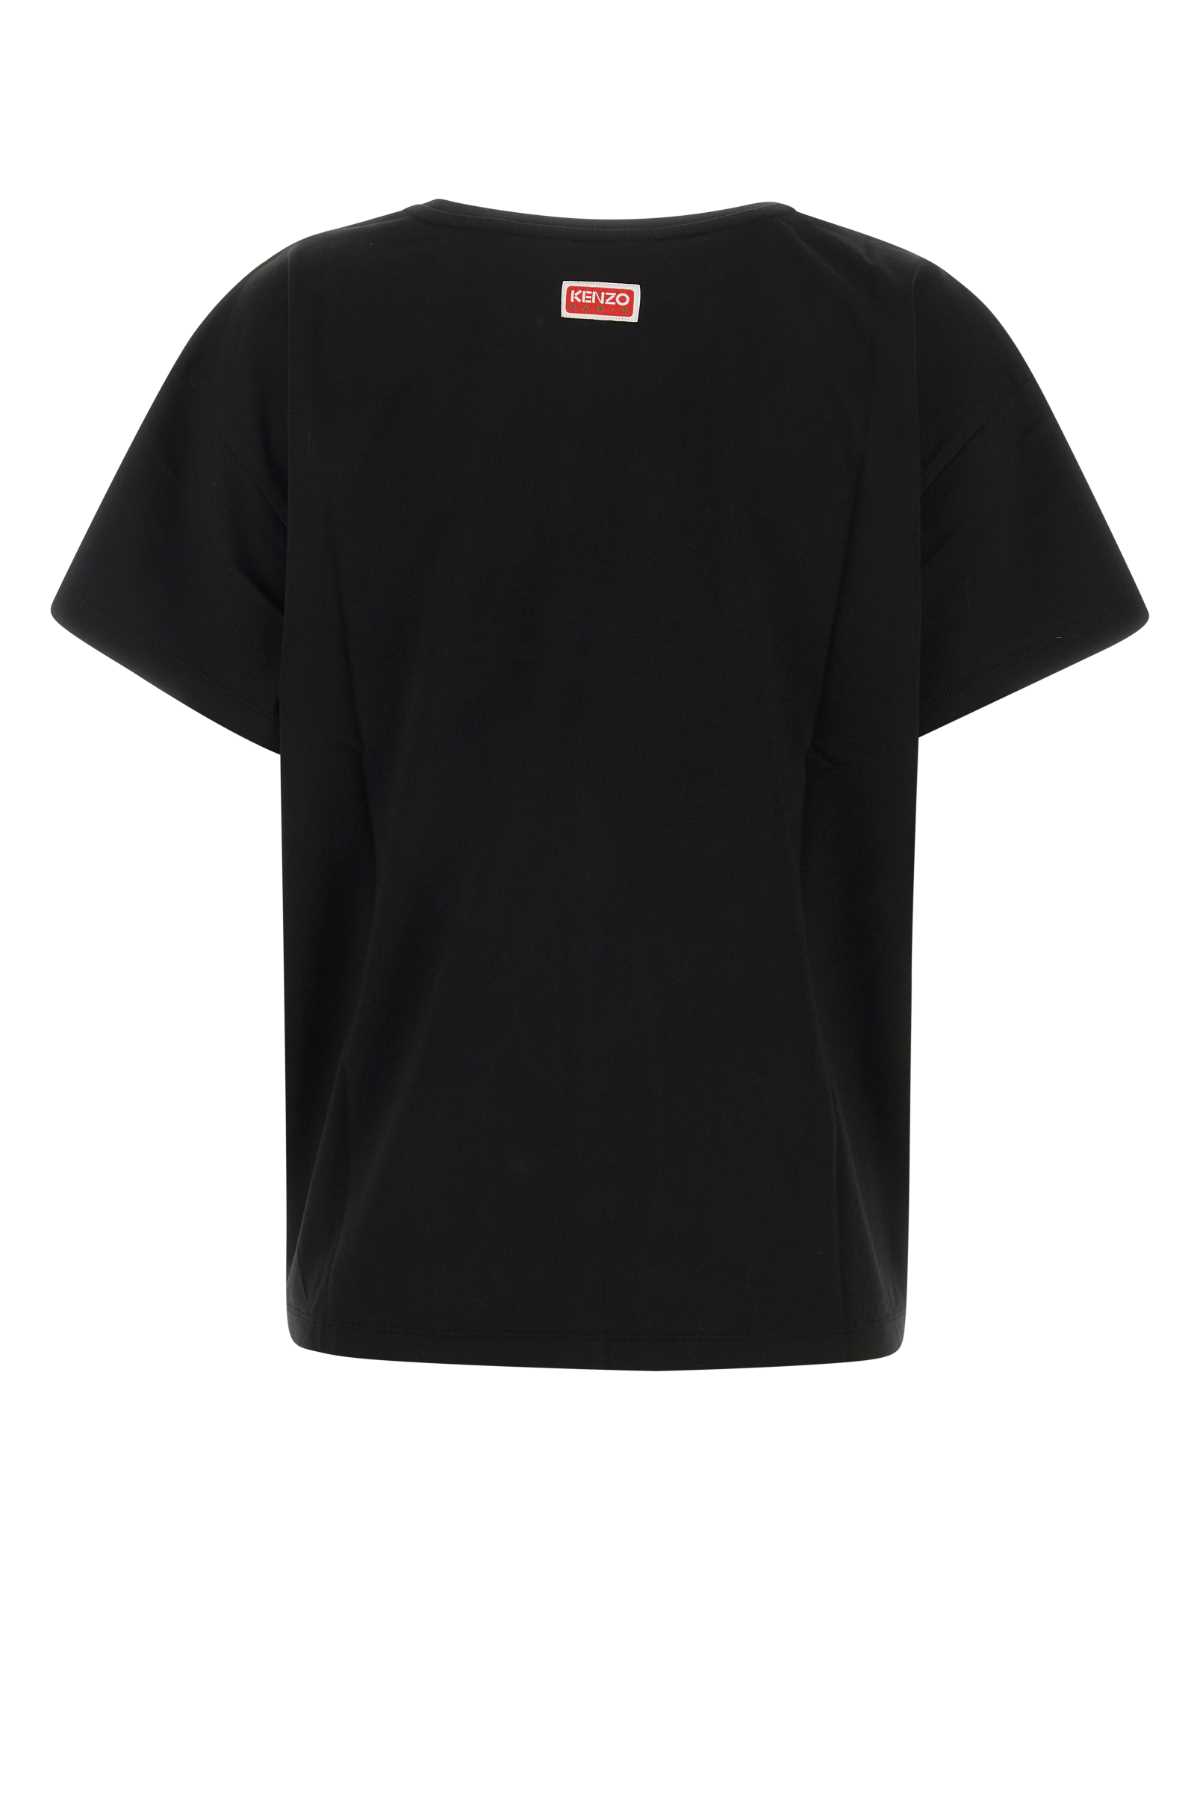 Kenzo Black Cotton T-shirt